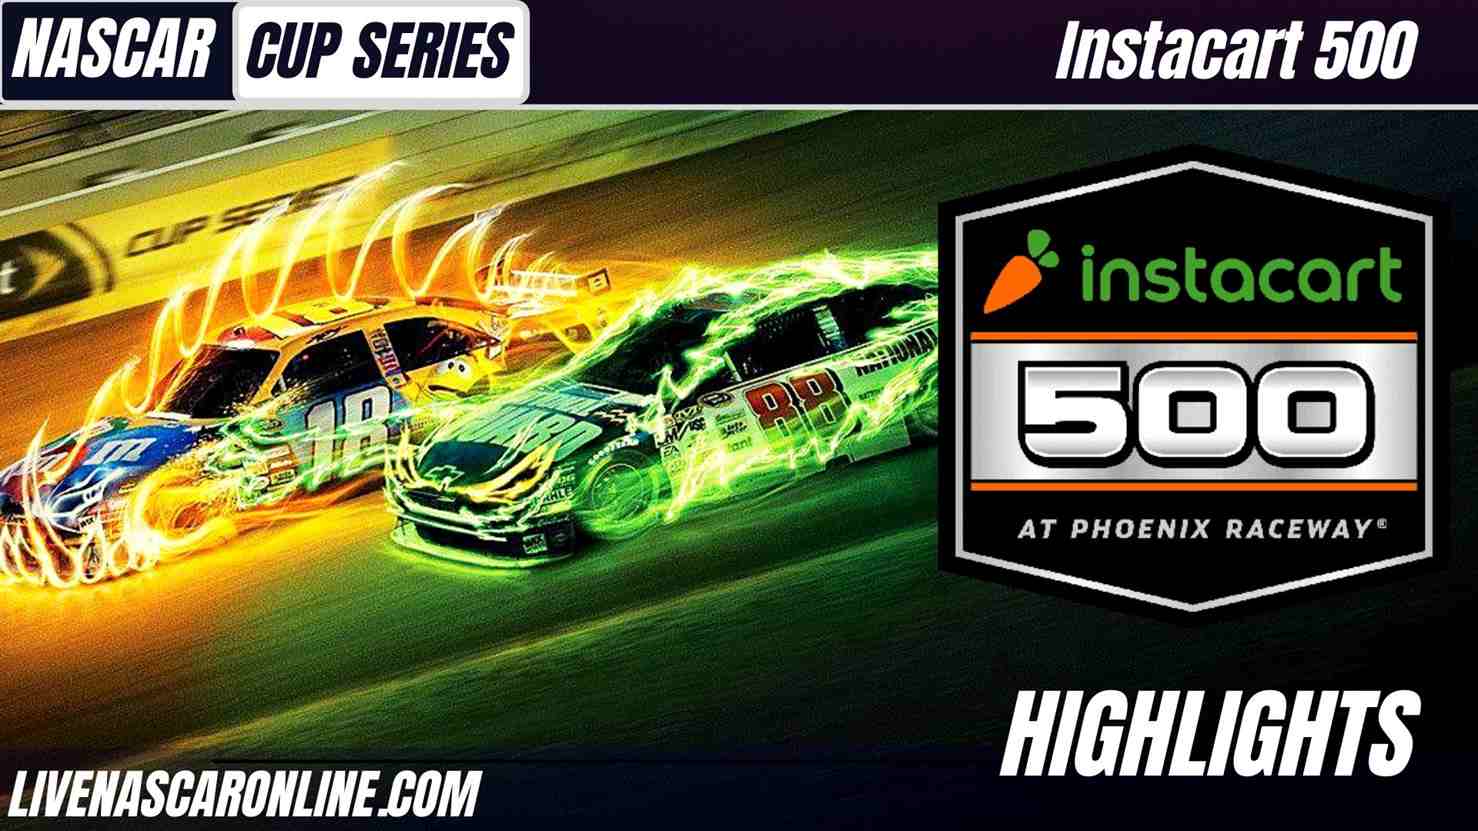 Instacart 500 Highlights 2021 Nascar Cup Series